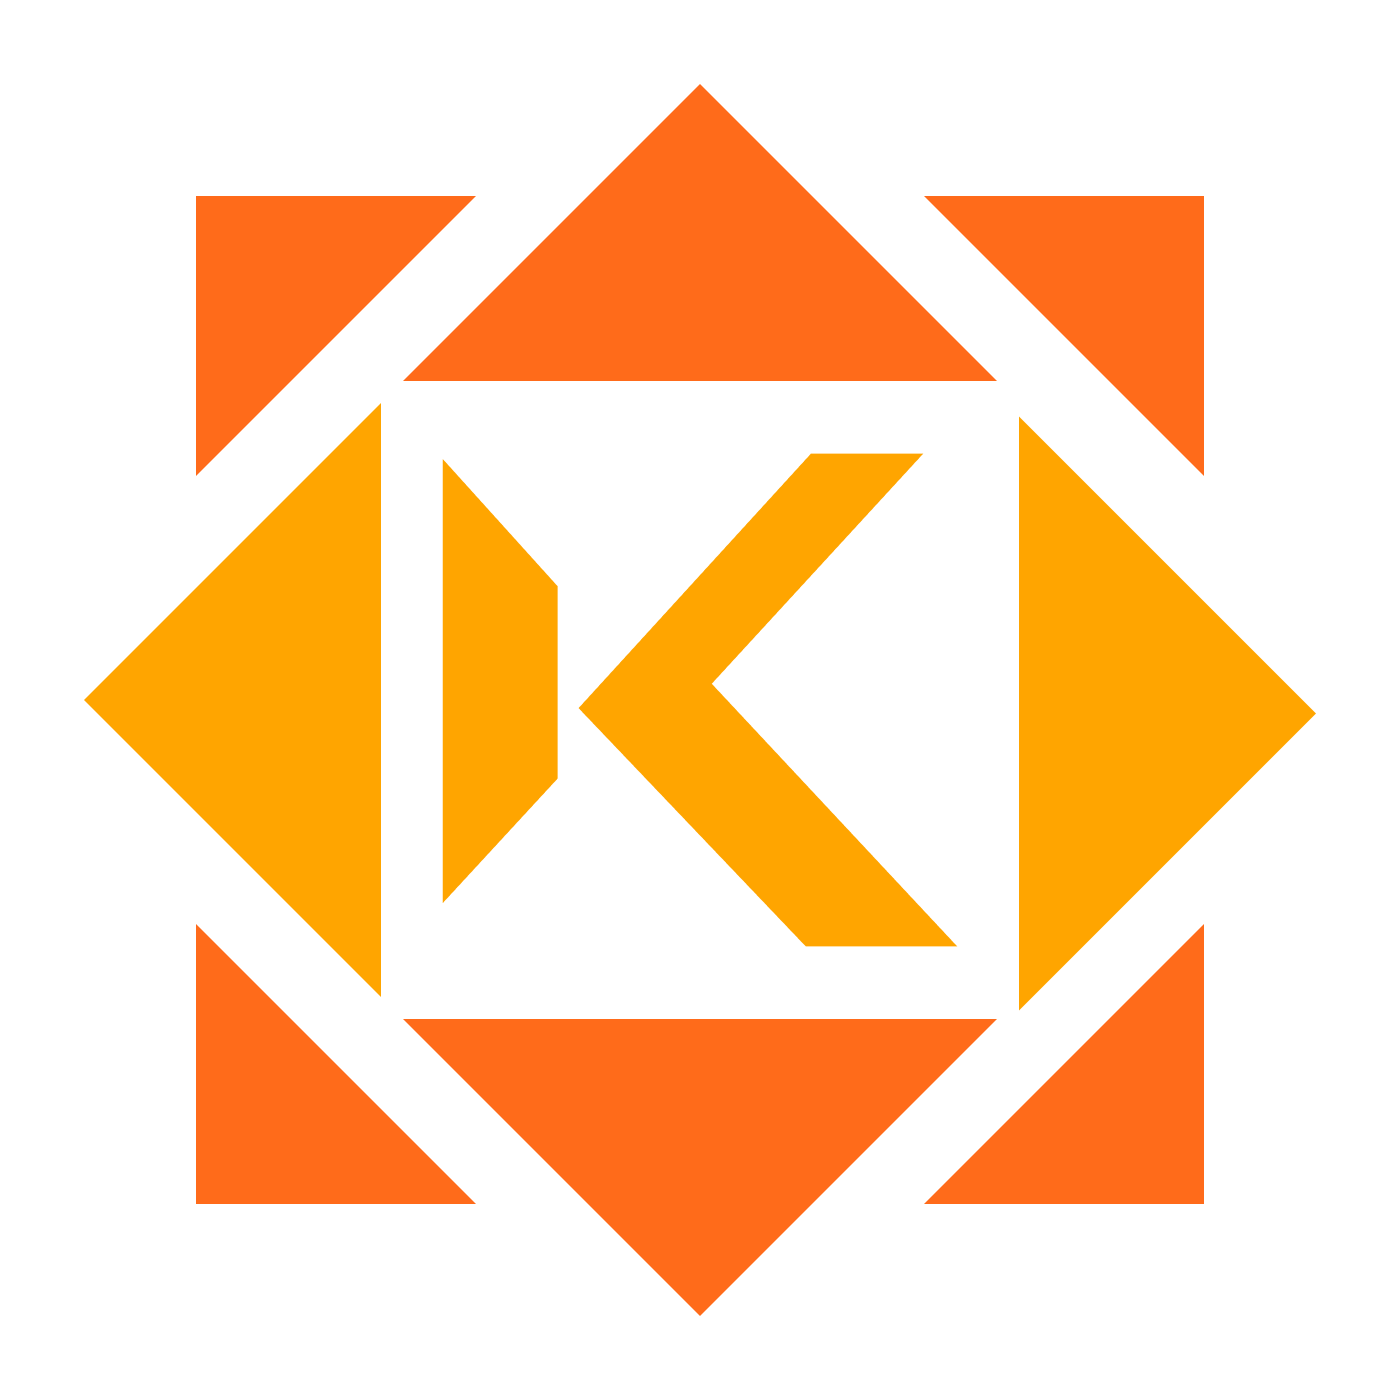 kakarot logo